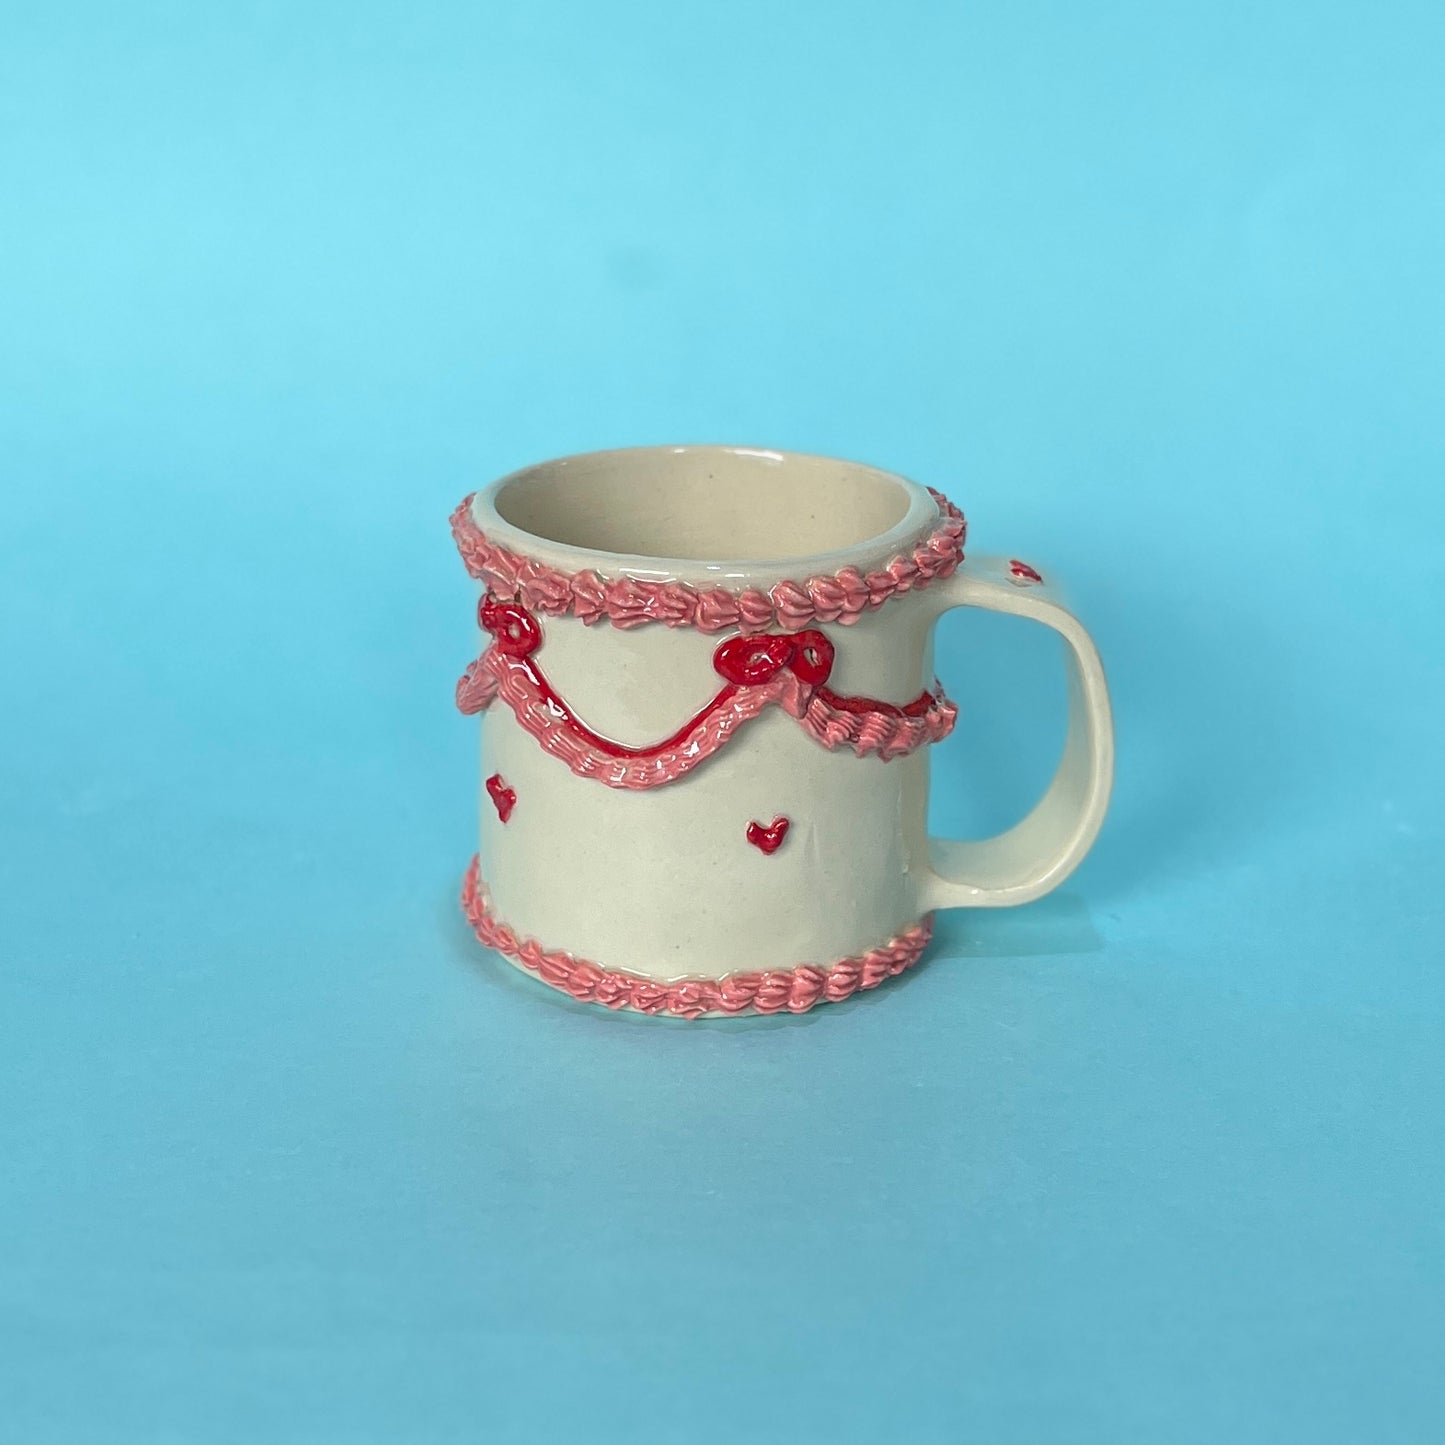 Pink and Red Royal Icing Mug